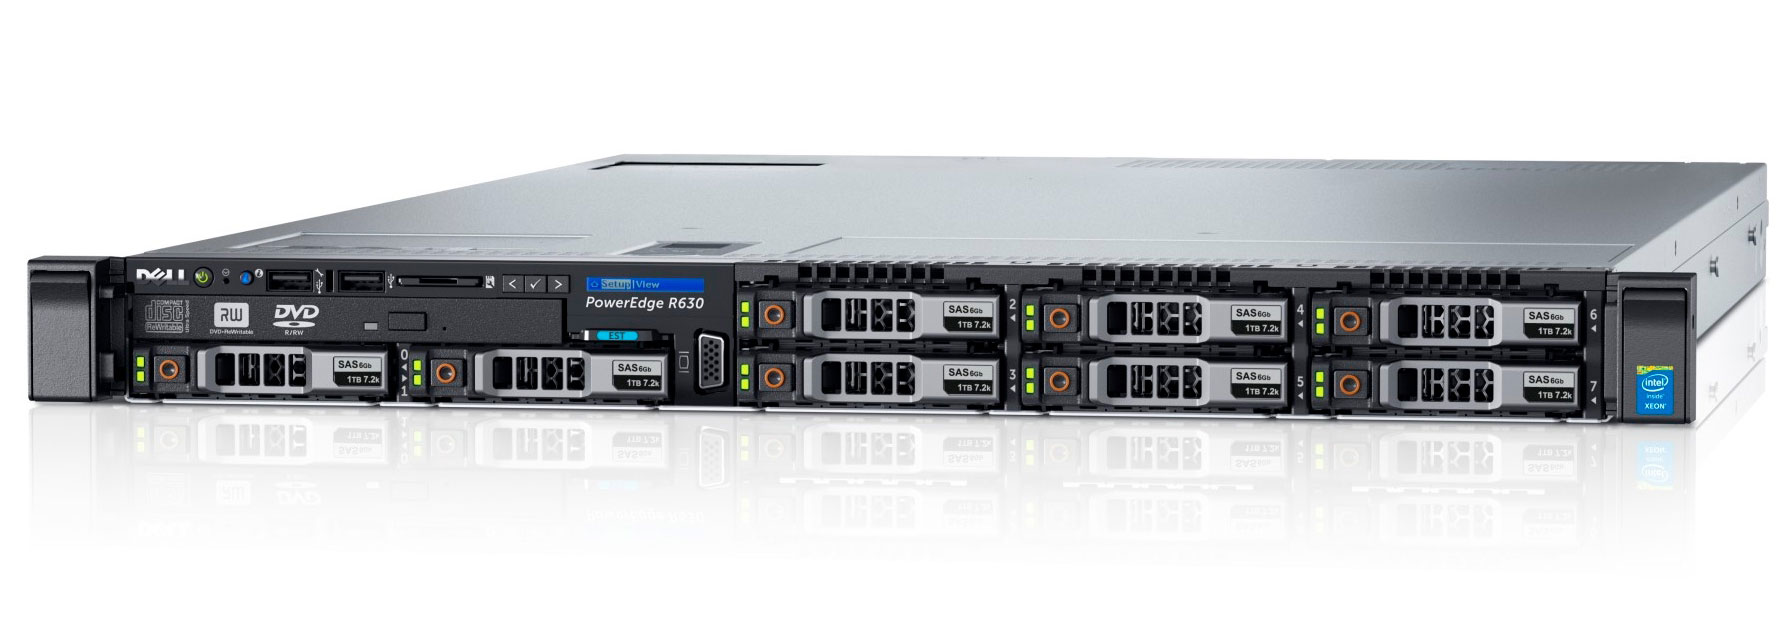 Подробное фото Сервер DELL PowerEdge R630 Xeon 2x E5-2670v3 192Gb DDR4 2133P 8x noHDD 2.5", SAS RAID Perc H730, 1024Mb, DVD, 2*PSU